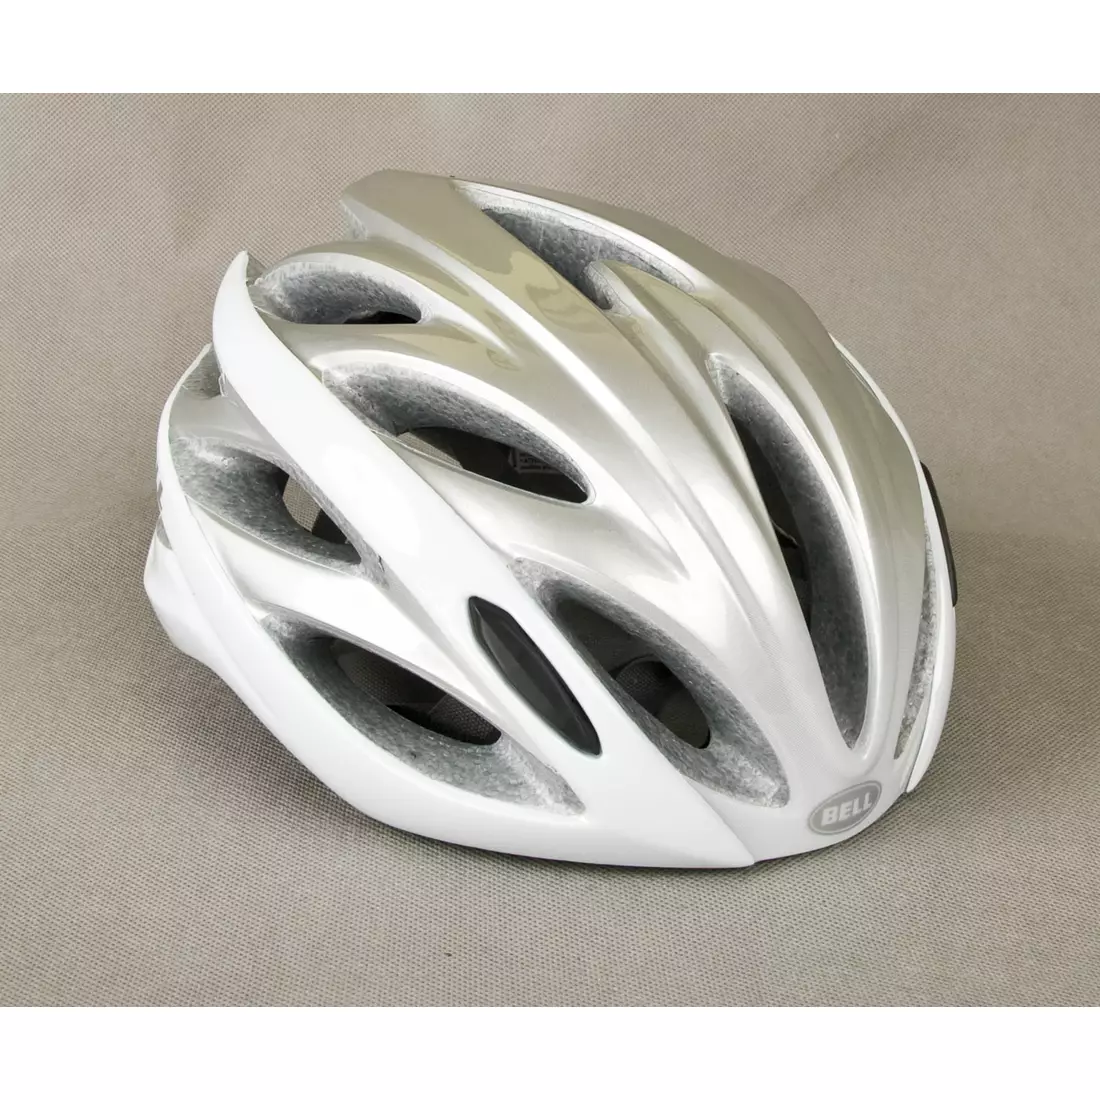 Cyklistická přilba BELL OVERDRIVE, stříbrná a bílá